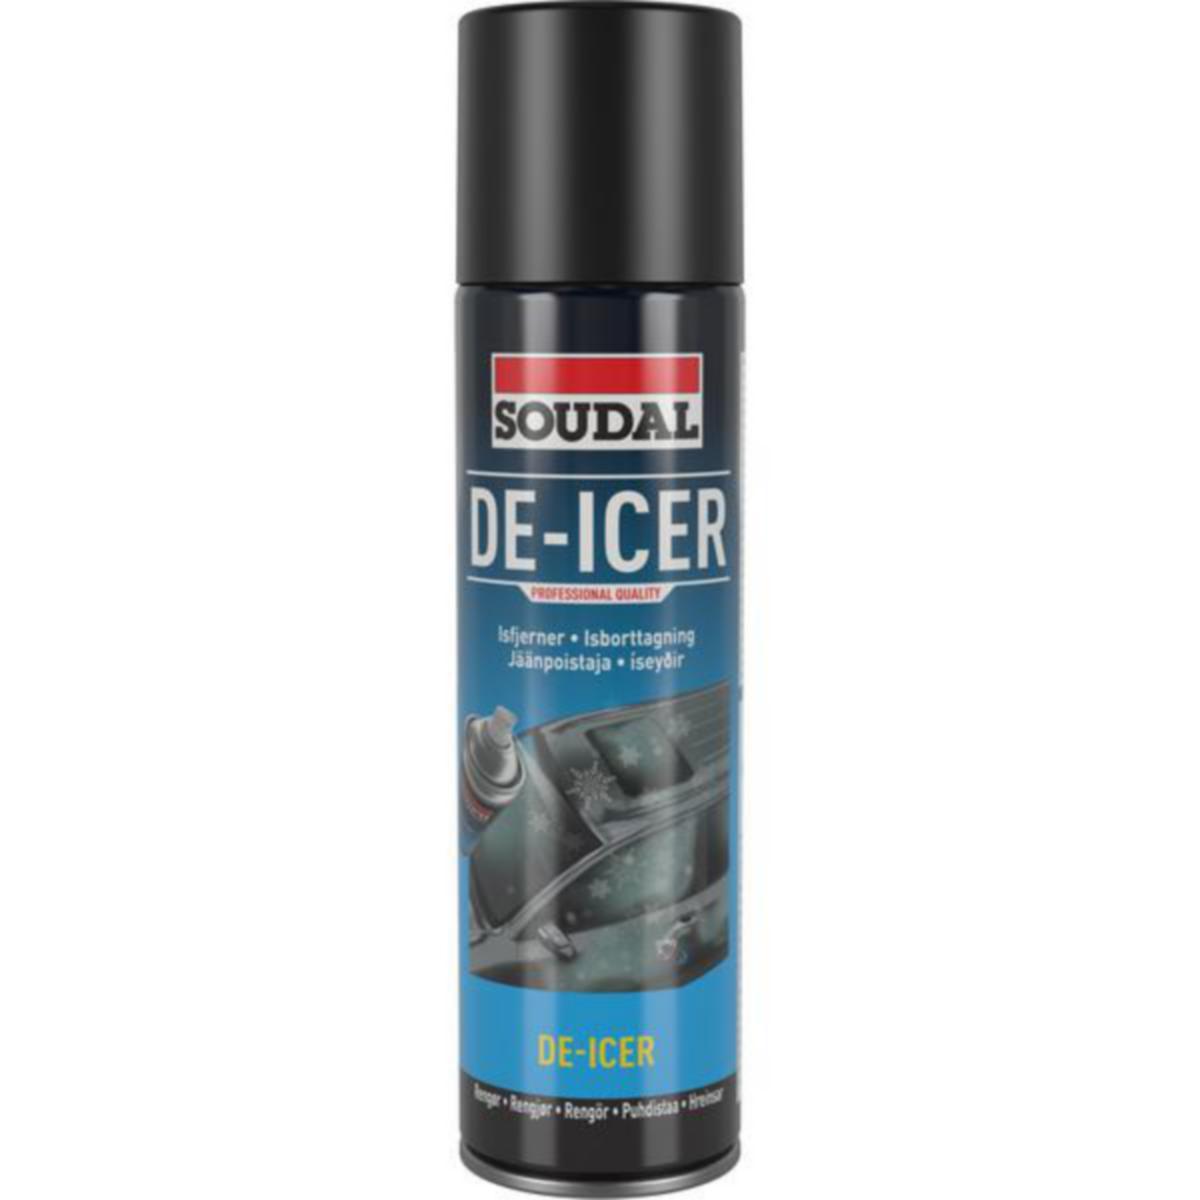 Avising de-icer soudal spray 400ml - avising soudal de-ic